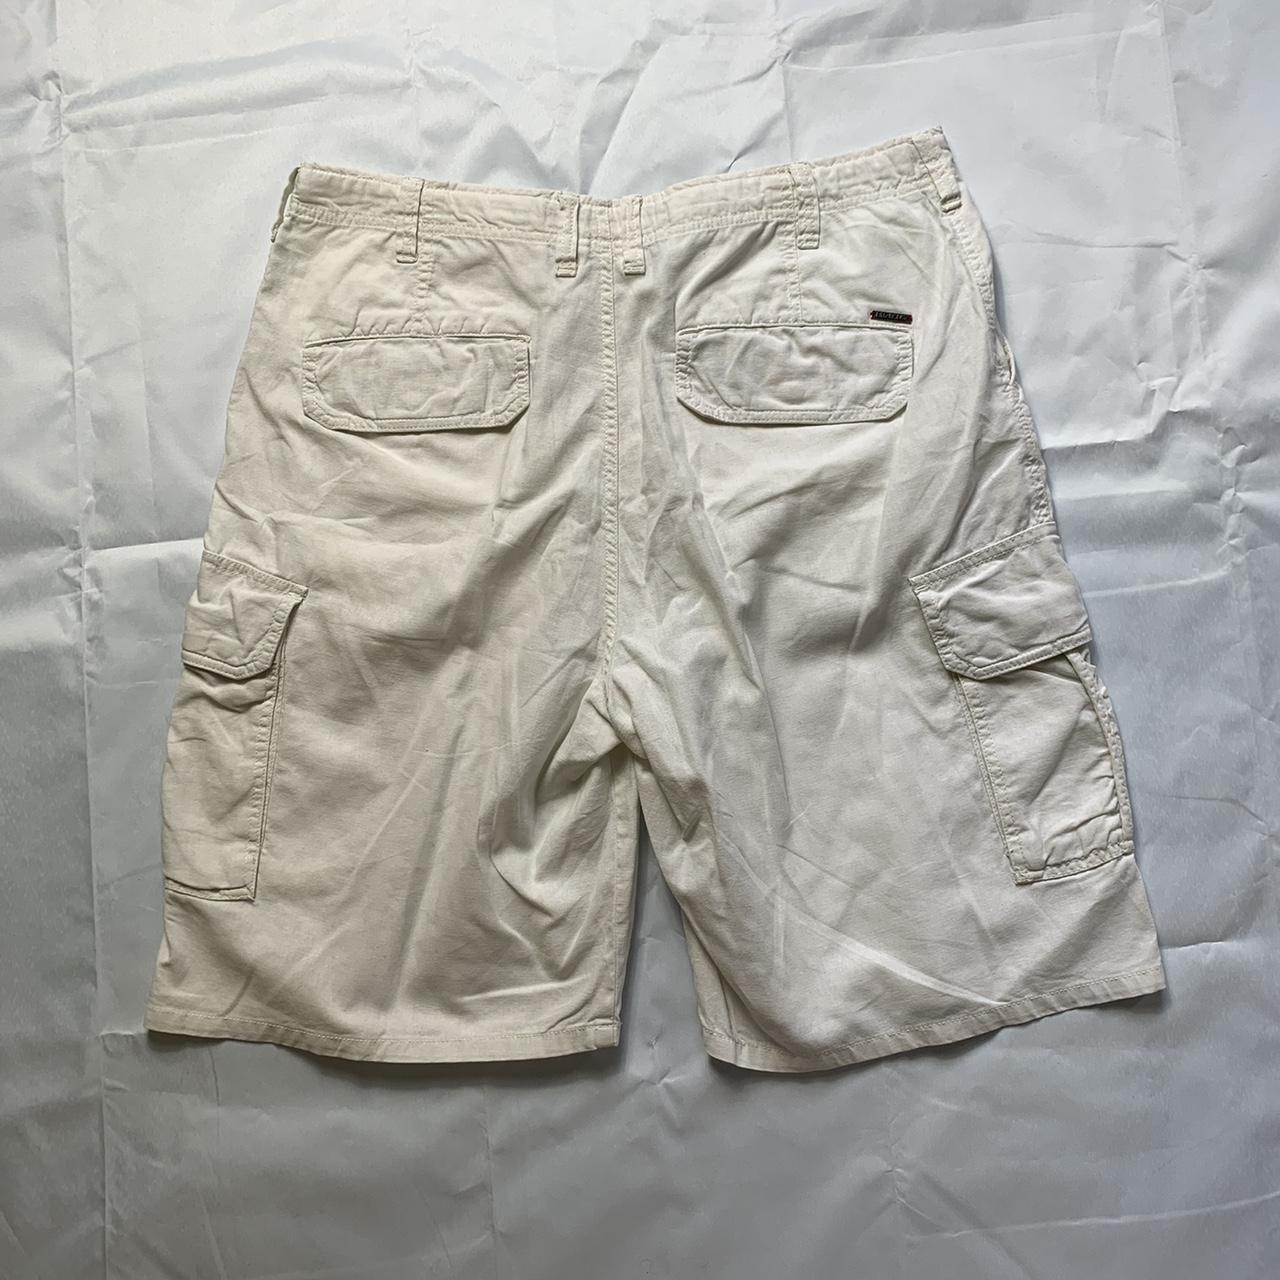 Billabong Men's White and Cream Shorts (3)